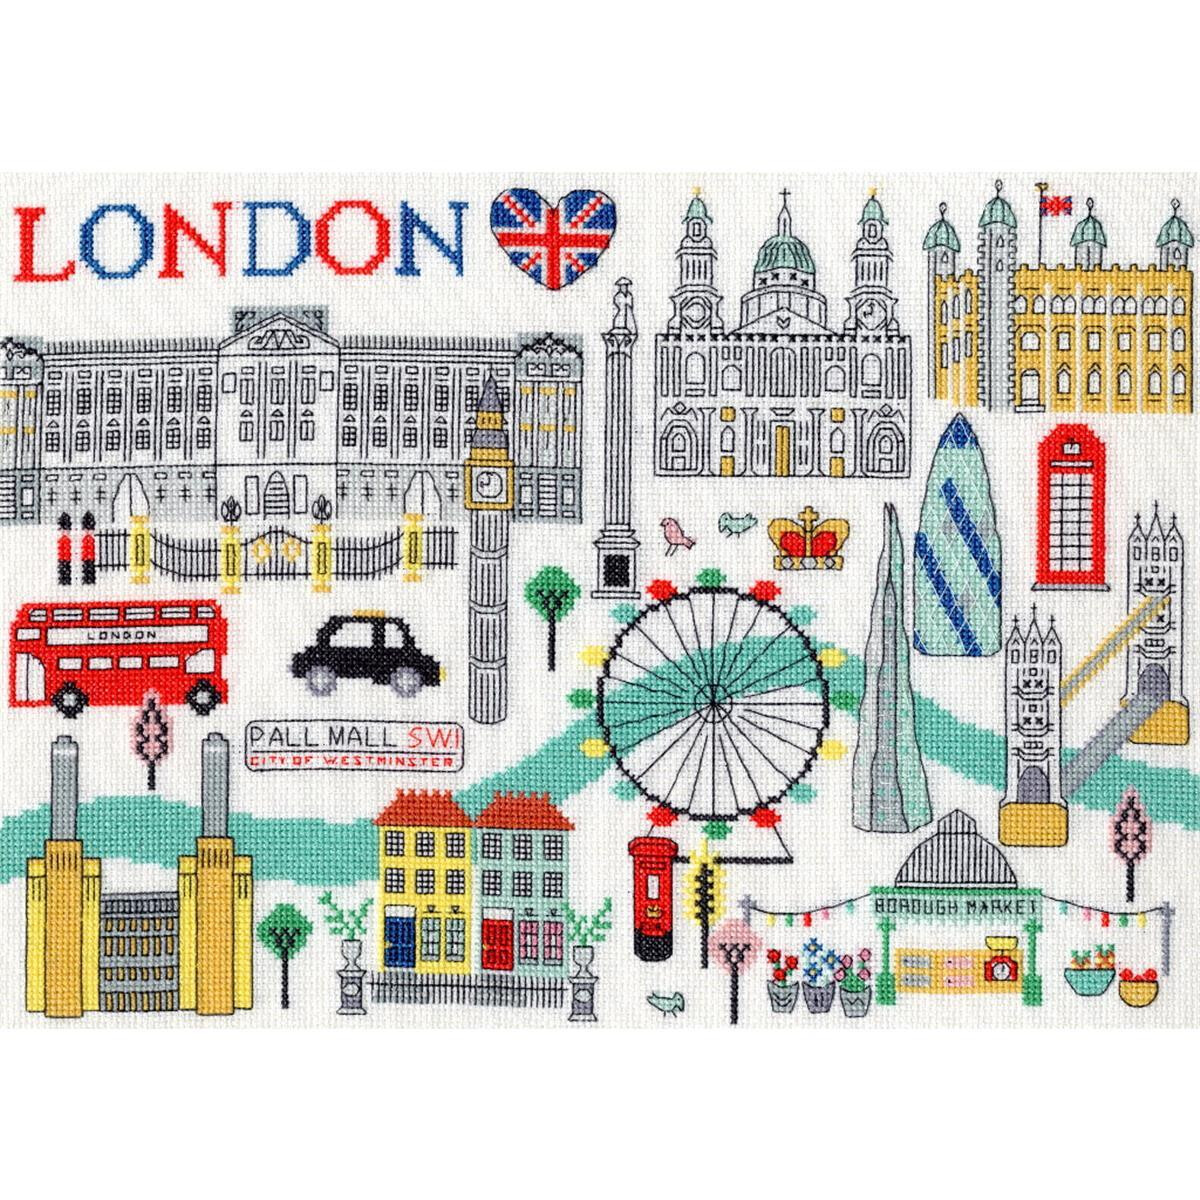 Playful illustration of London landmarks such as...